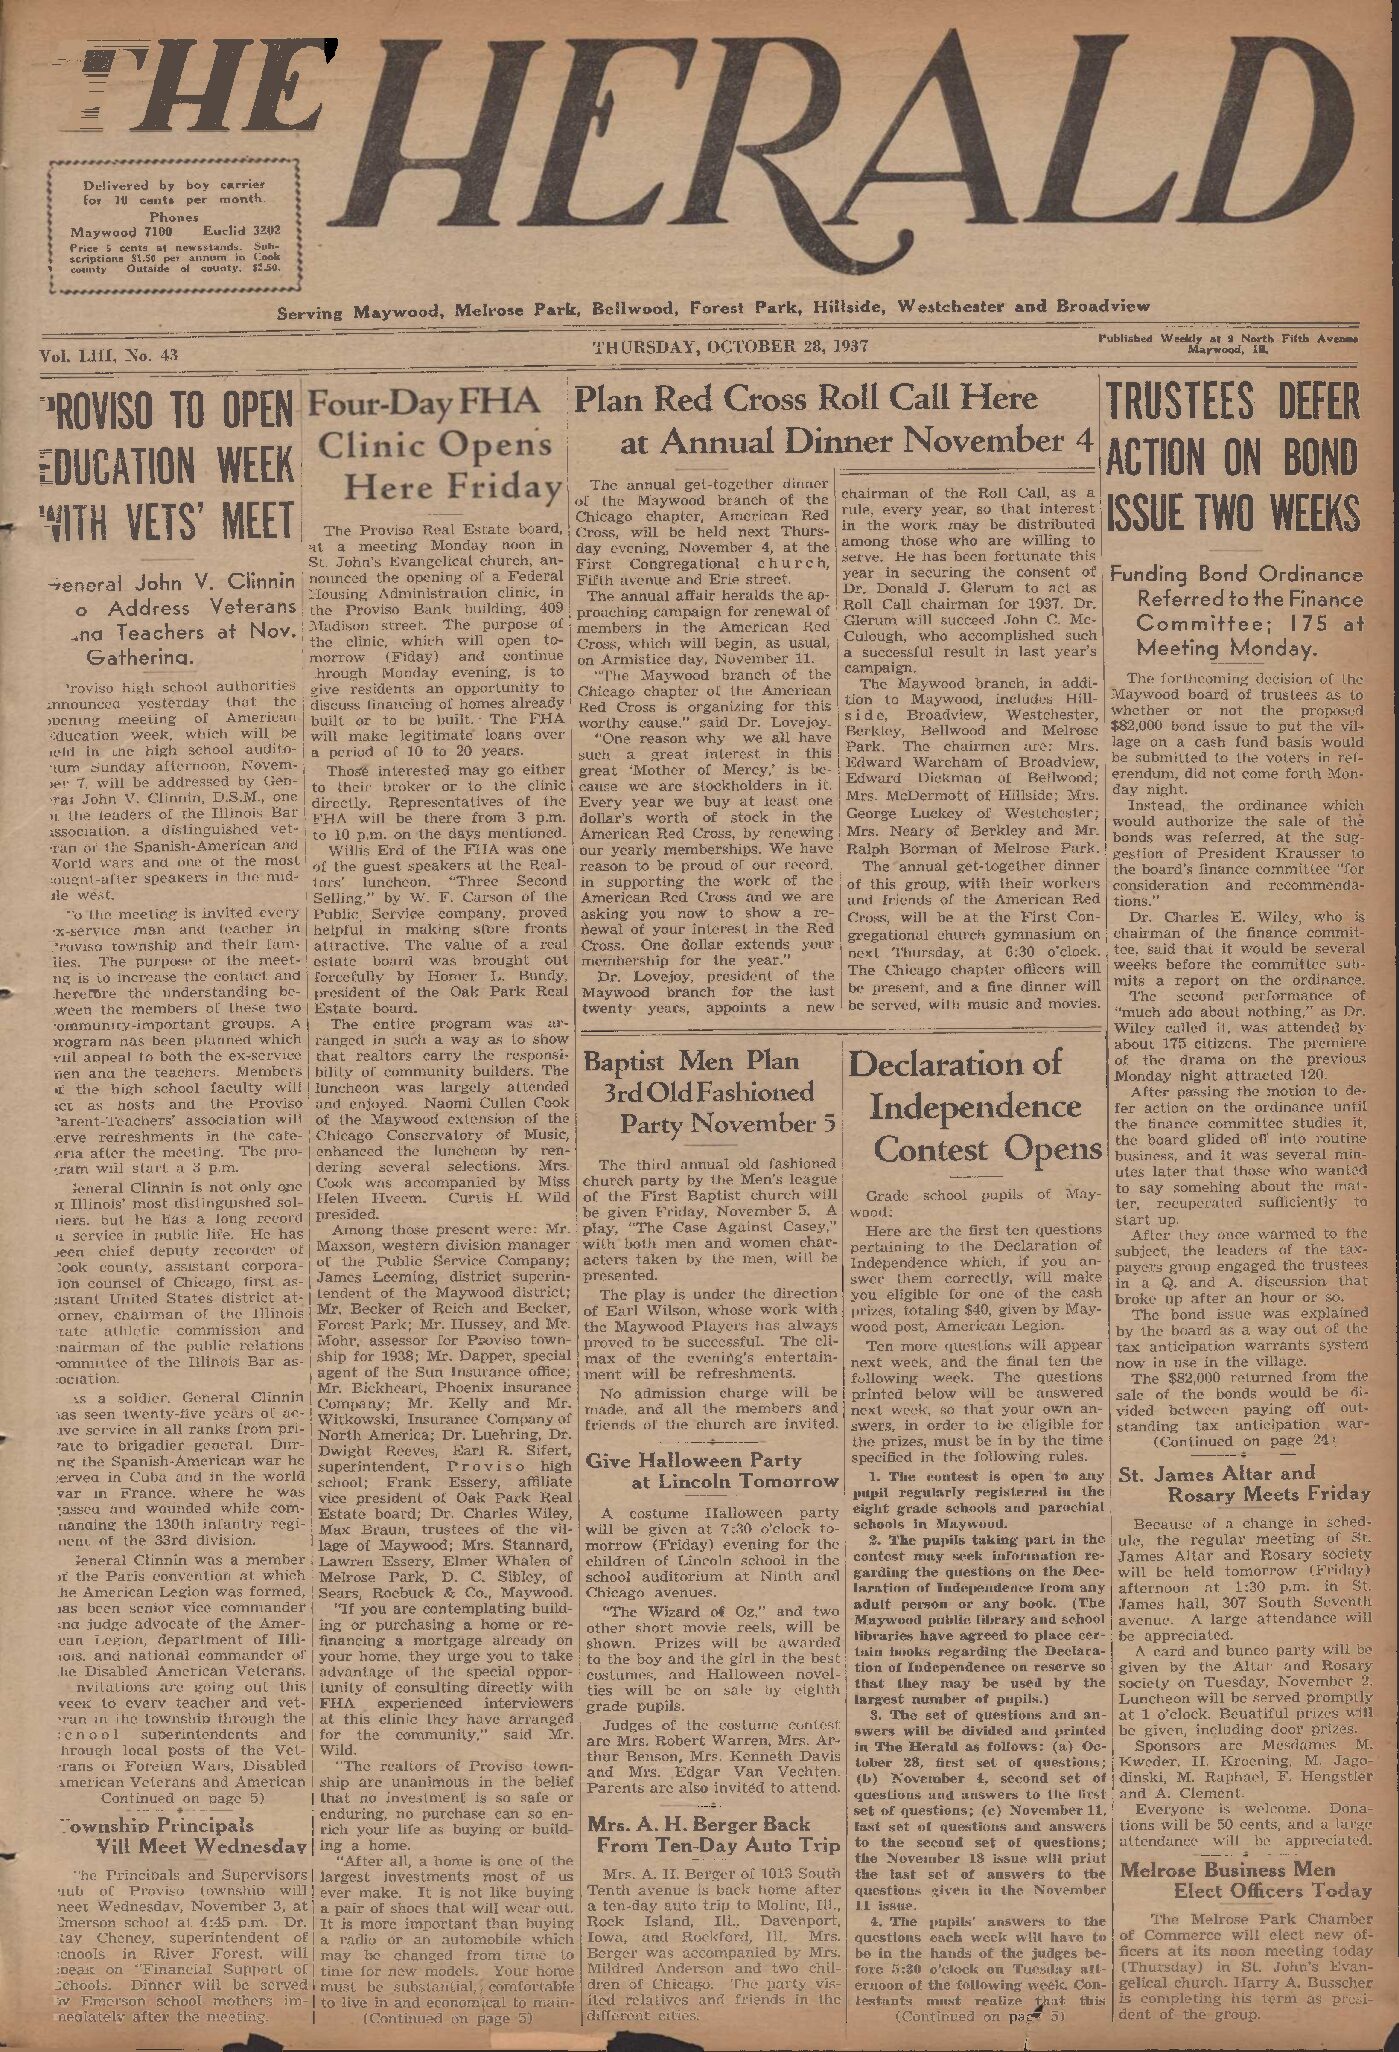 The Herald – 19371028